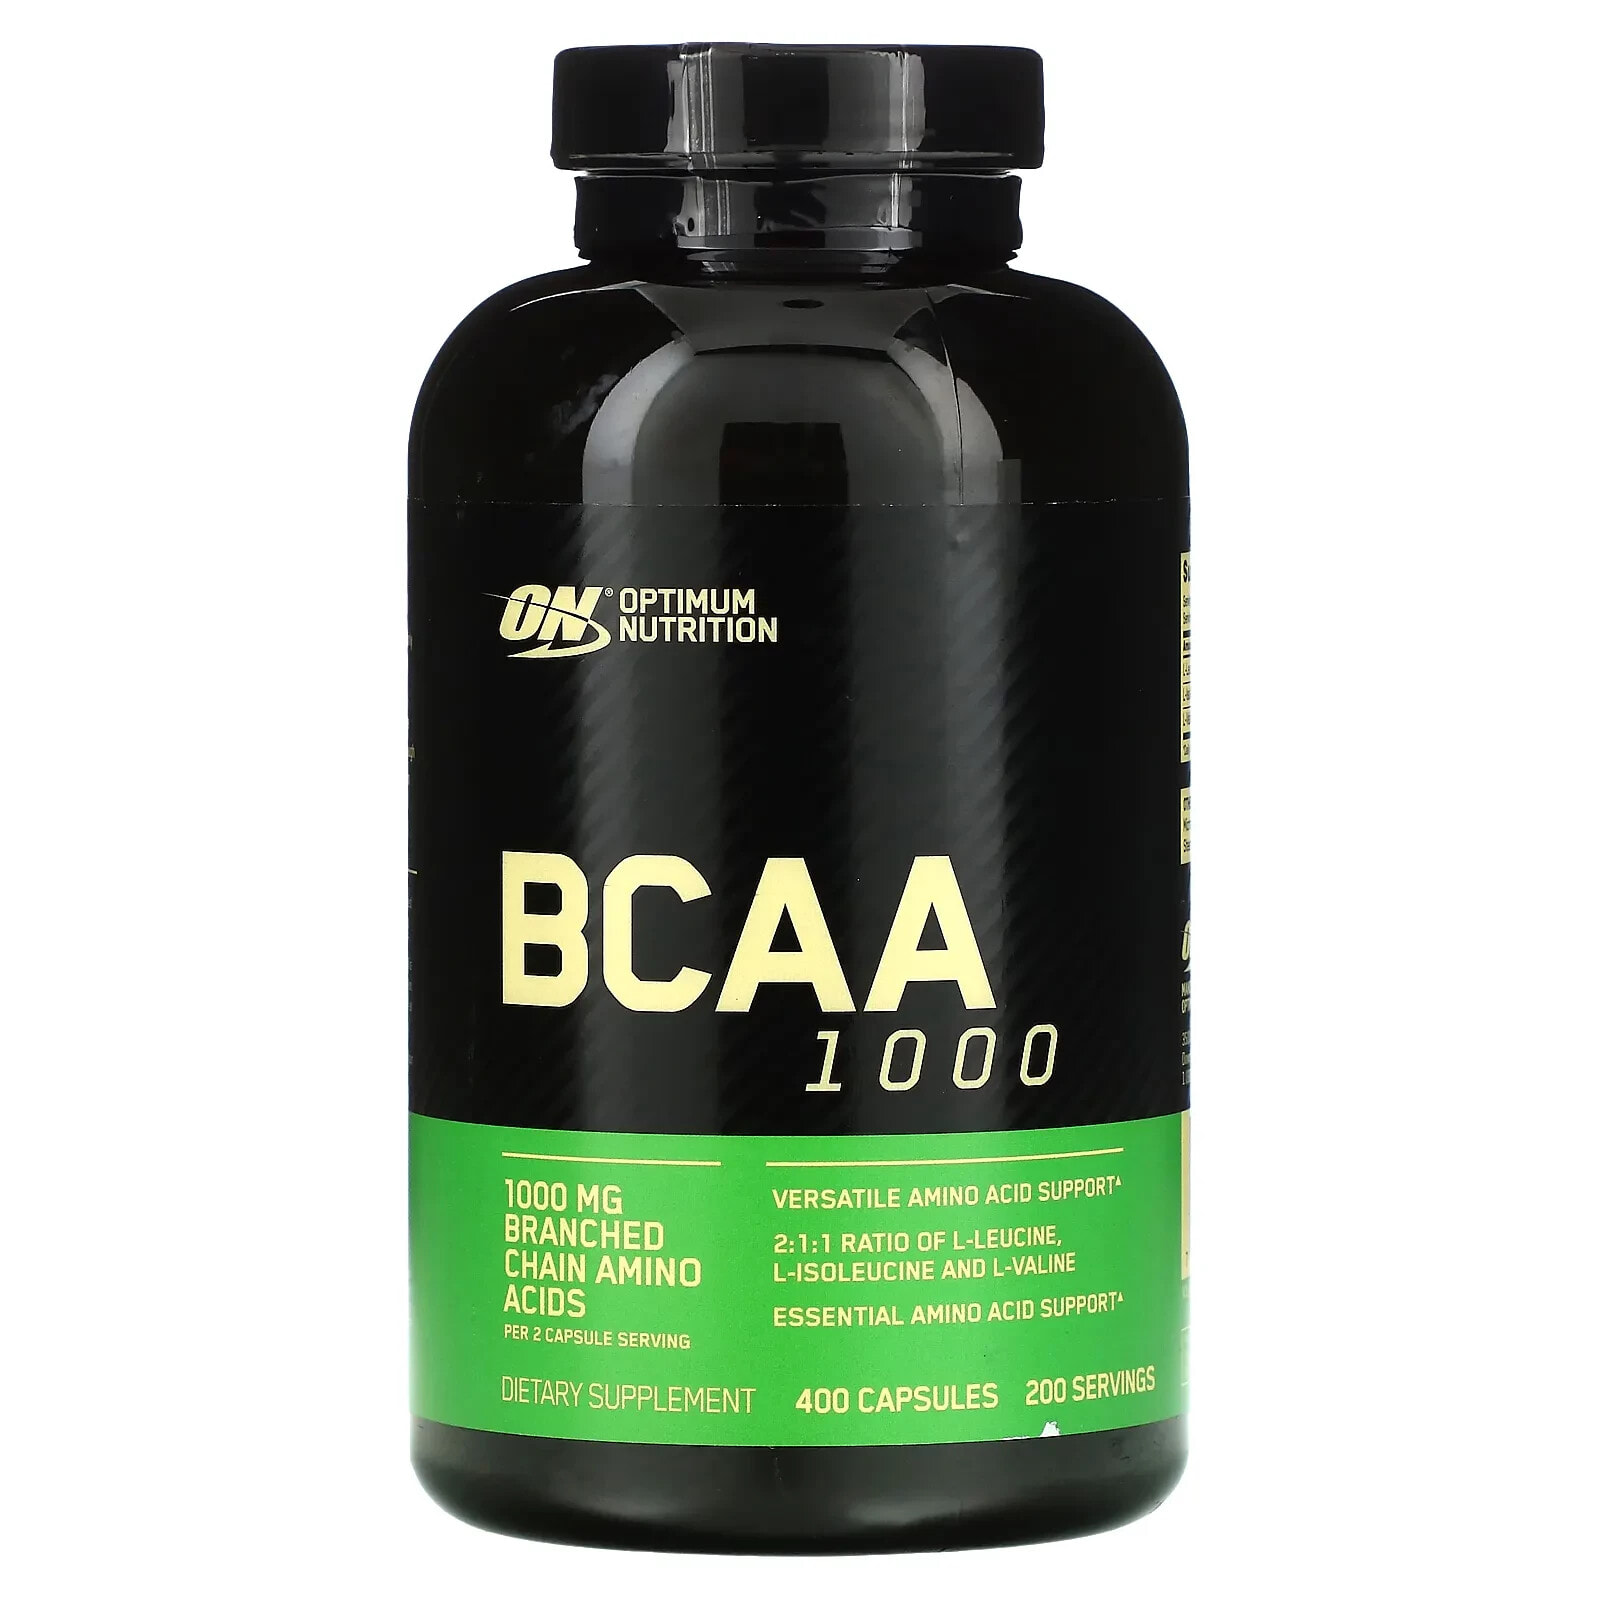 BCAA 1000, 1,000 mg, 200 Capsules (500 mg per Capsule)